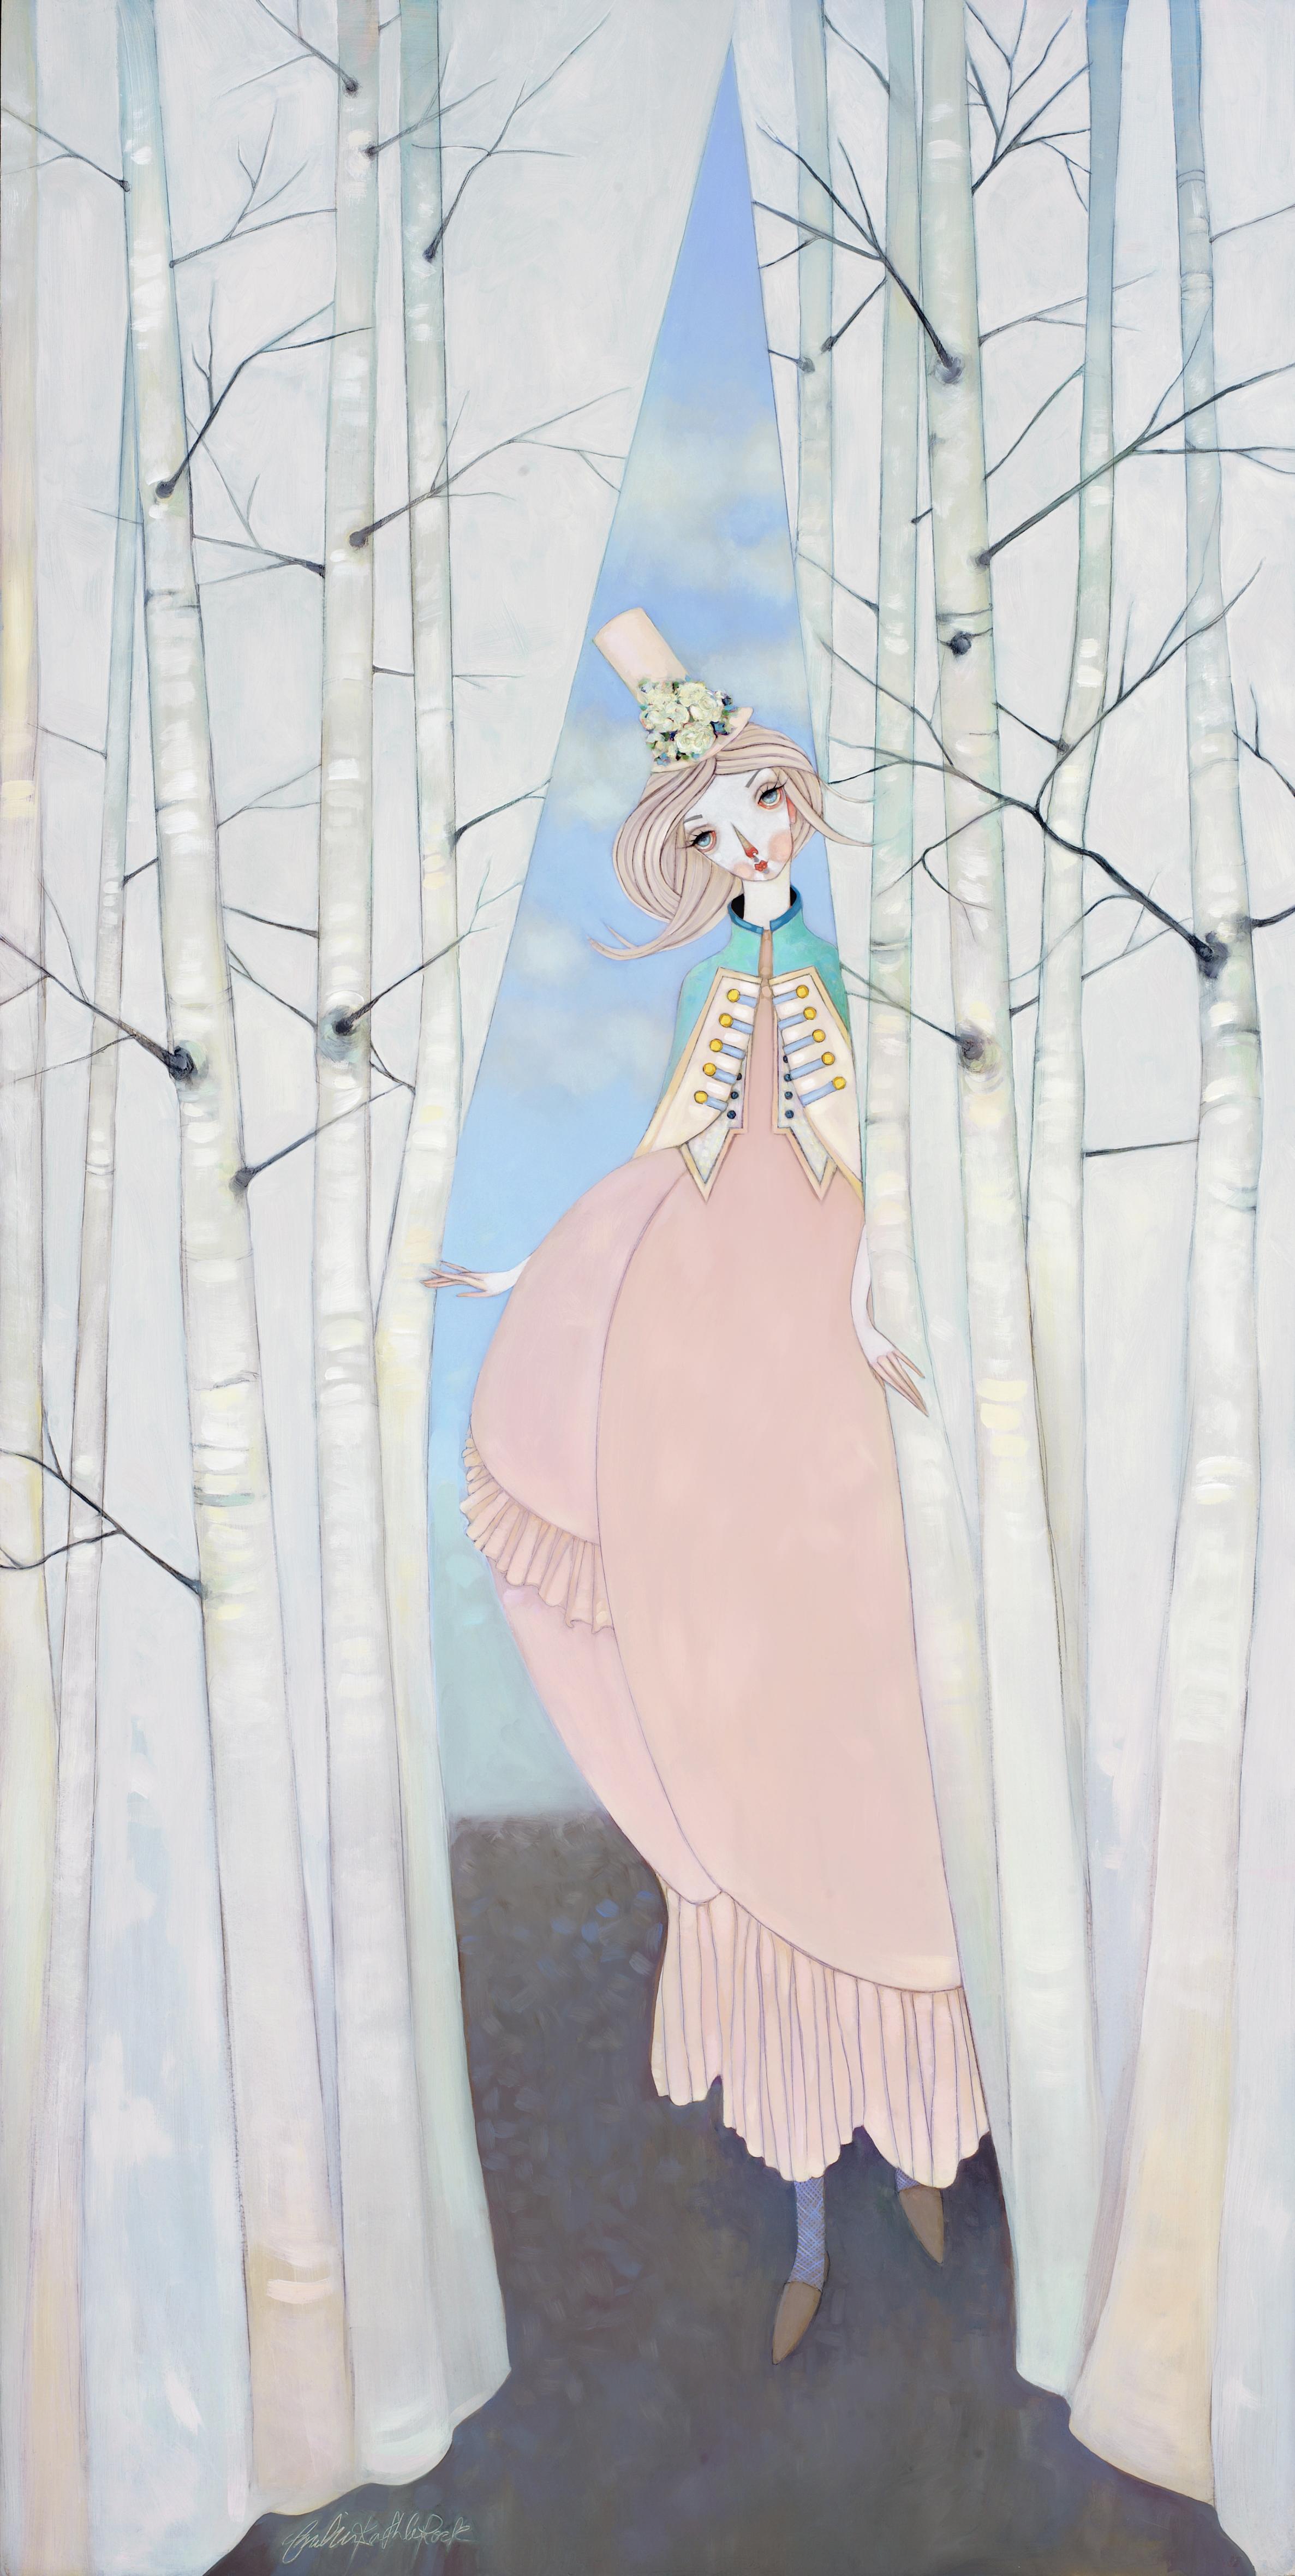 Melissa Peck Figurative Painting - "Curtain of Trees"